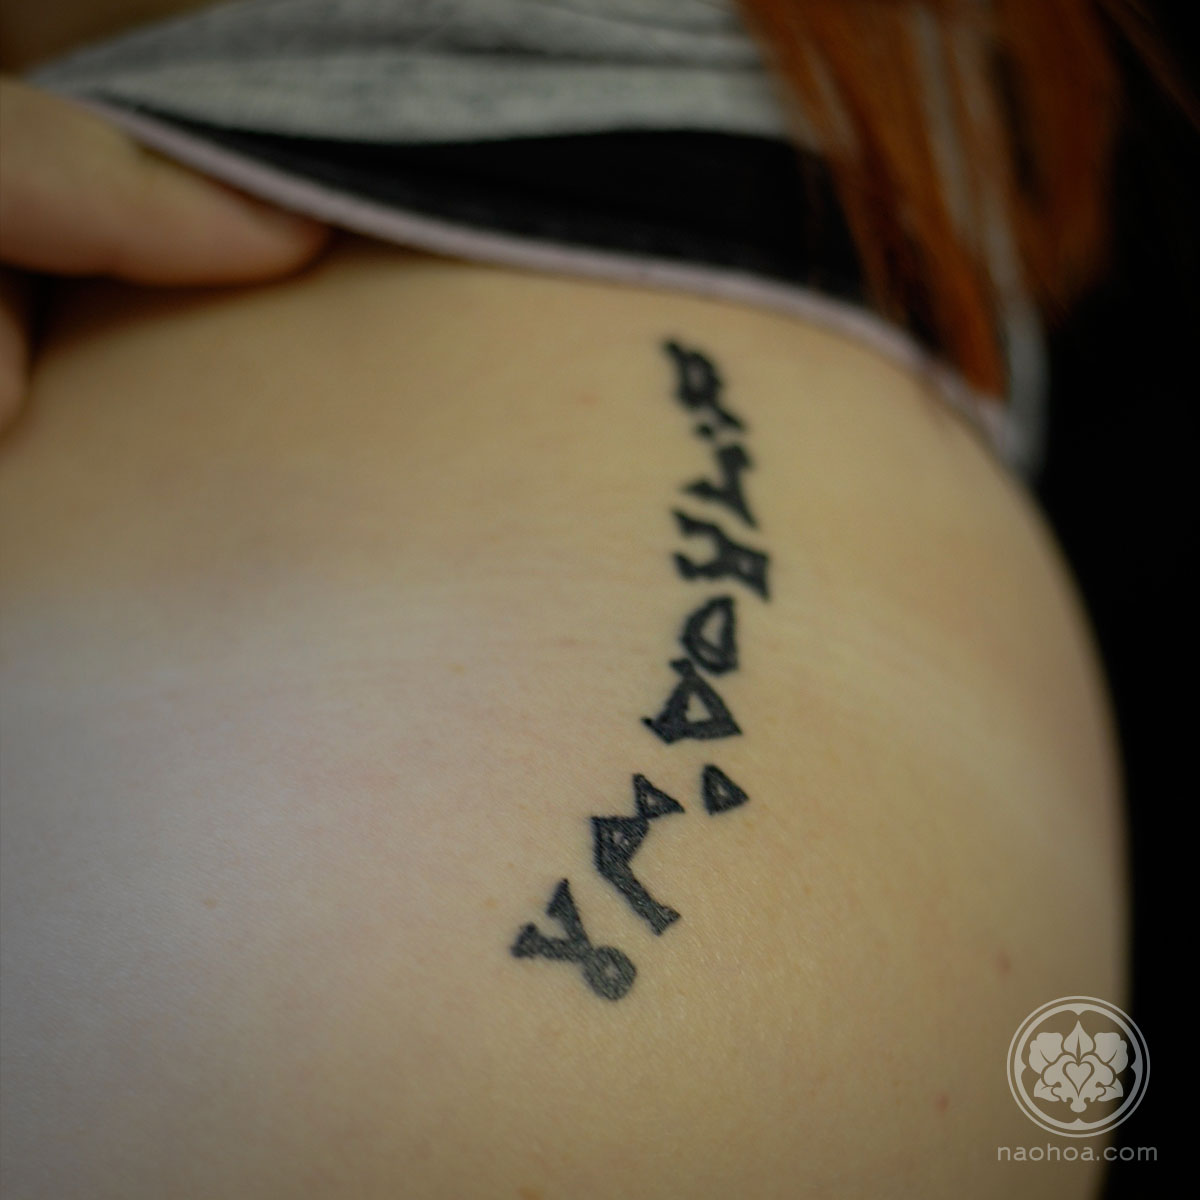 A tattoo of symbols from Stargate by Naomi Hoang, NAOHOA Luxury Bespoke Tattoos, Cardiff, Wales (UK).